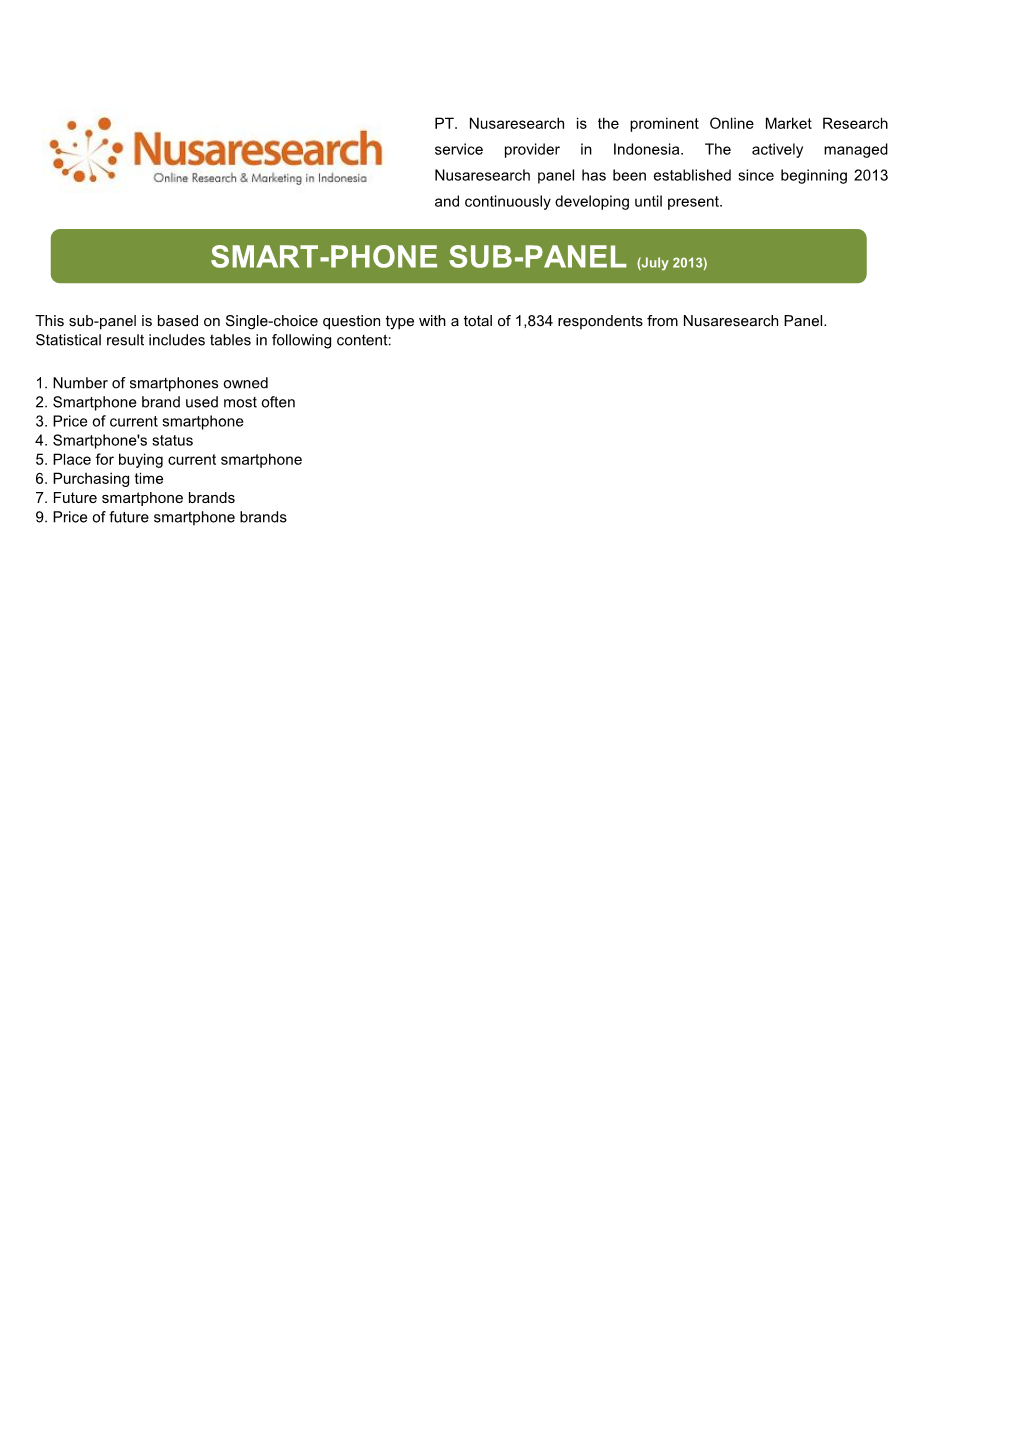 SMART-PHONE SUB-PANEL (July 2013)